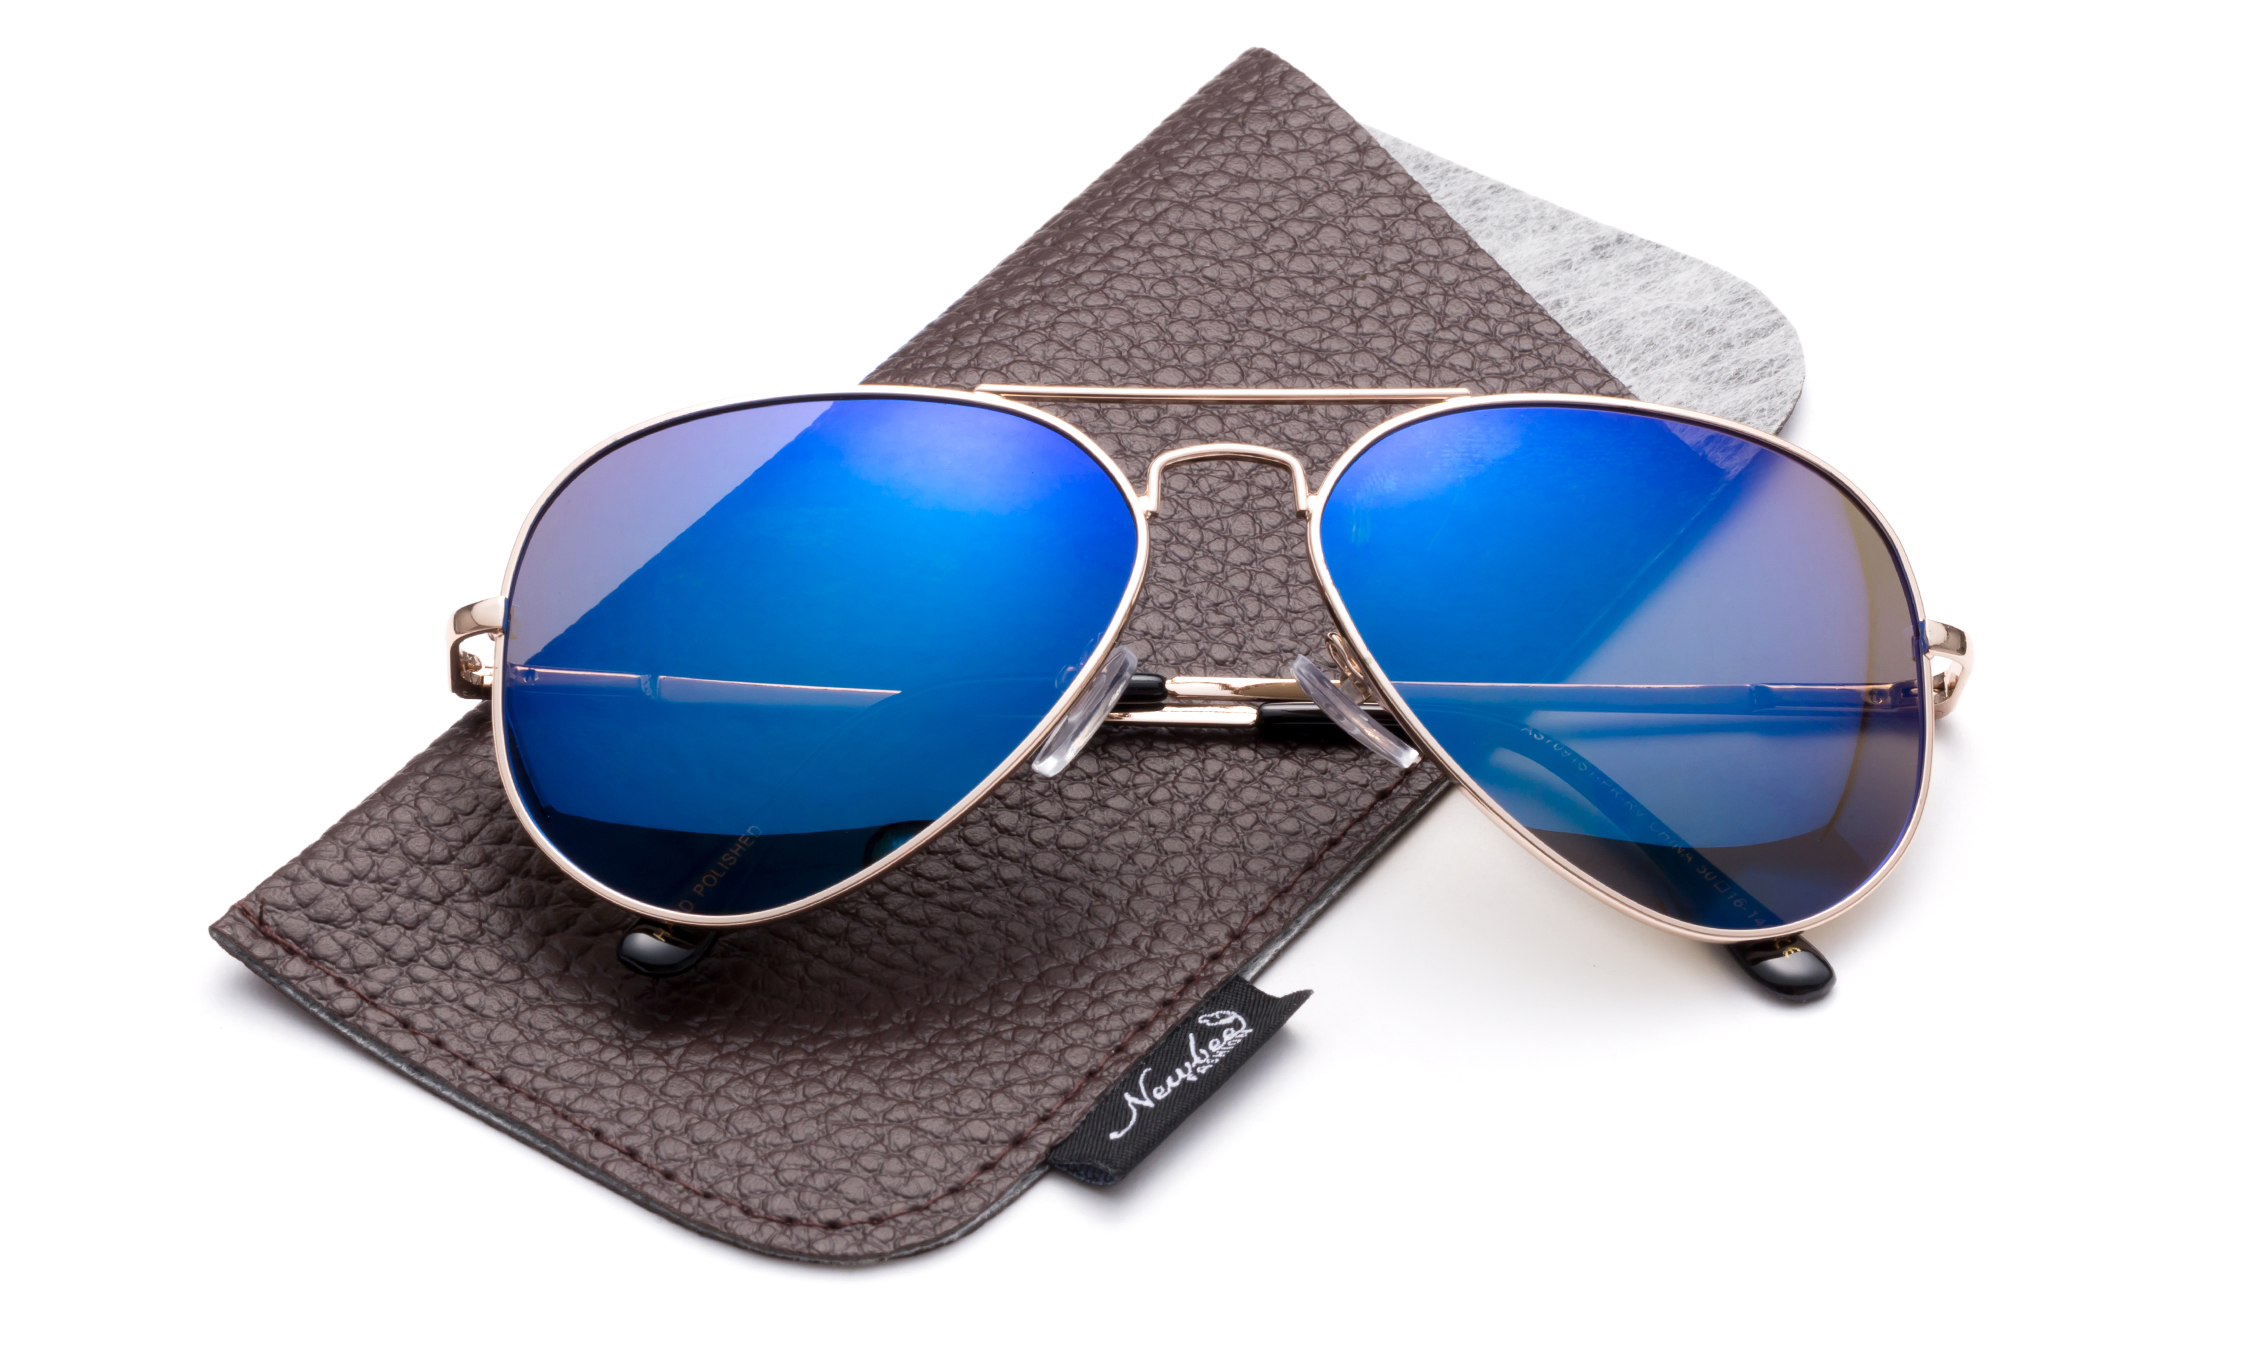 Polarized Aviator Sunglasses Mirrored Lens Classic Aviator Polarized Sunglasses Small - image 1 of 3